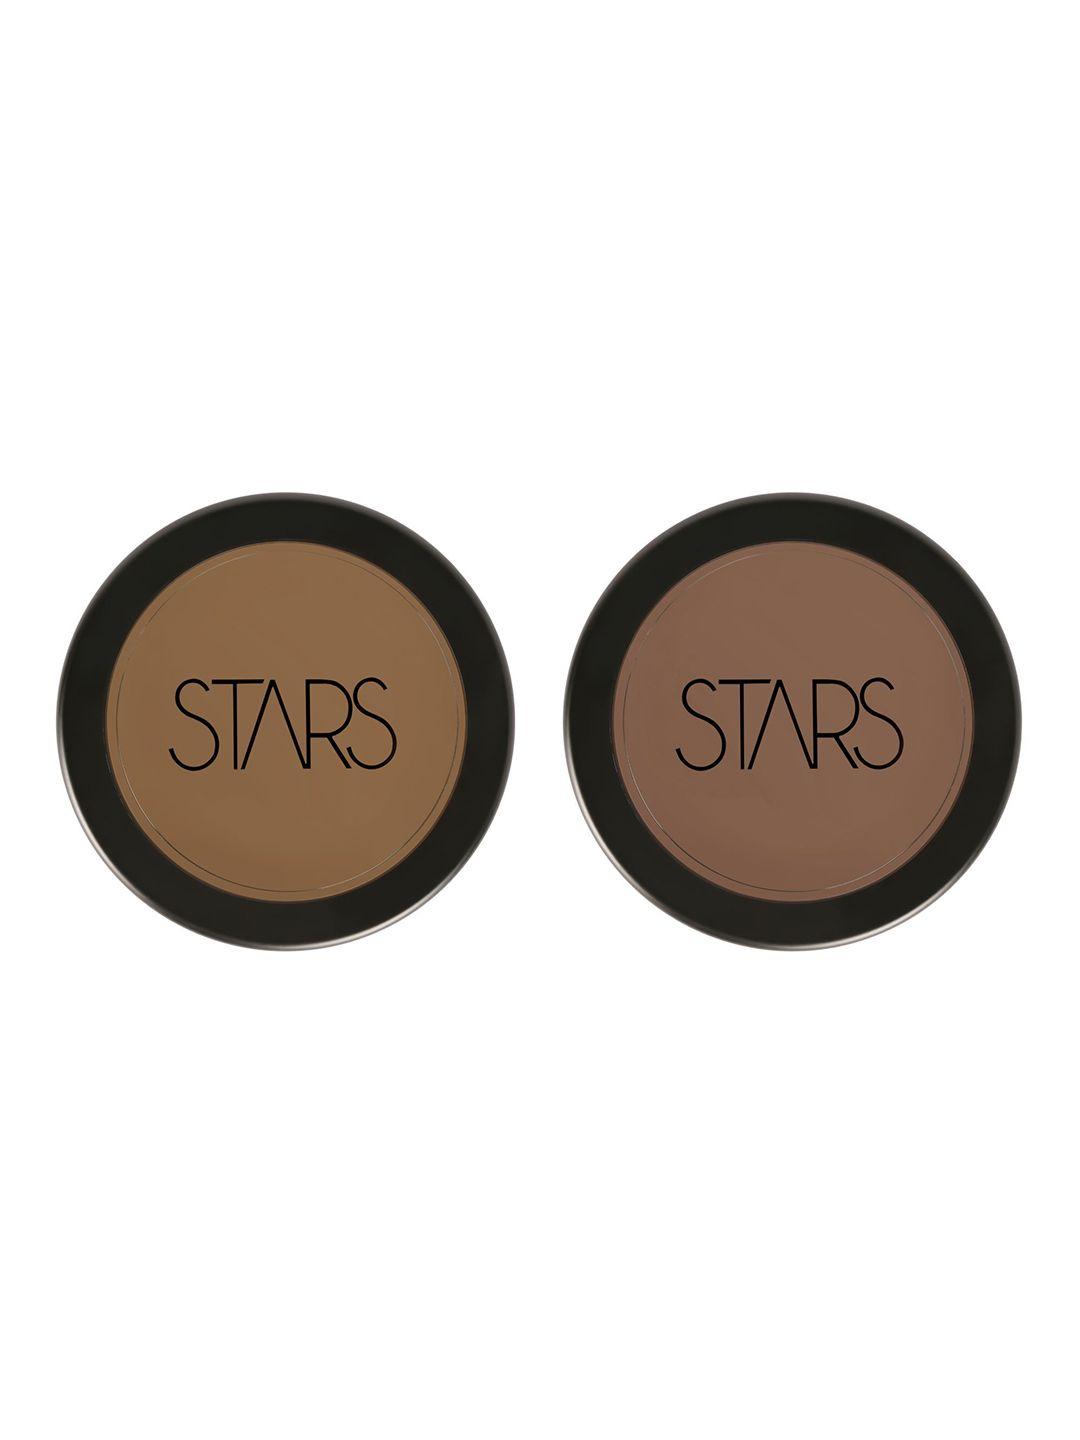 stars cosmetics face makeup derma foundation set of 2 -8g each-dj4-ng